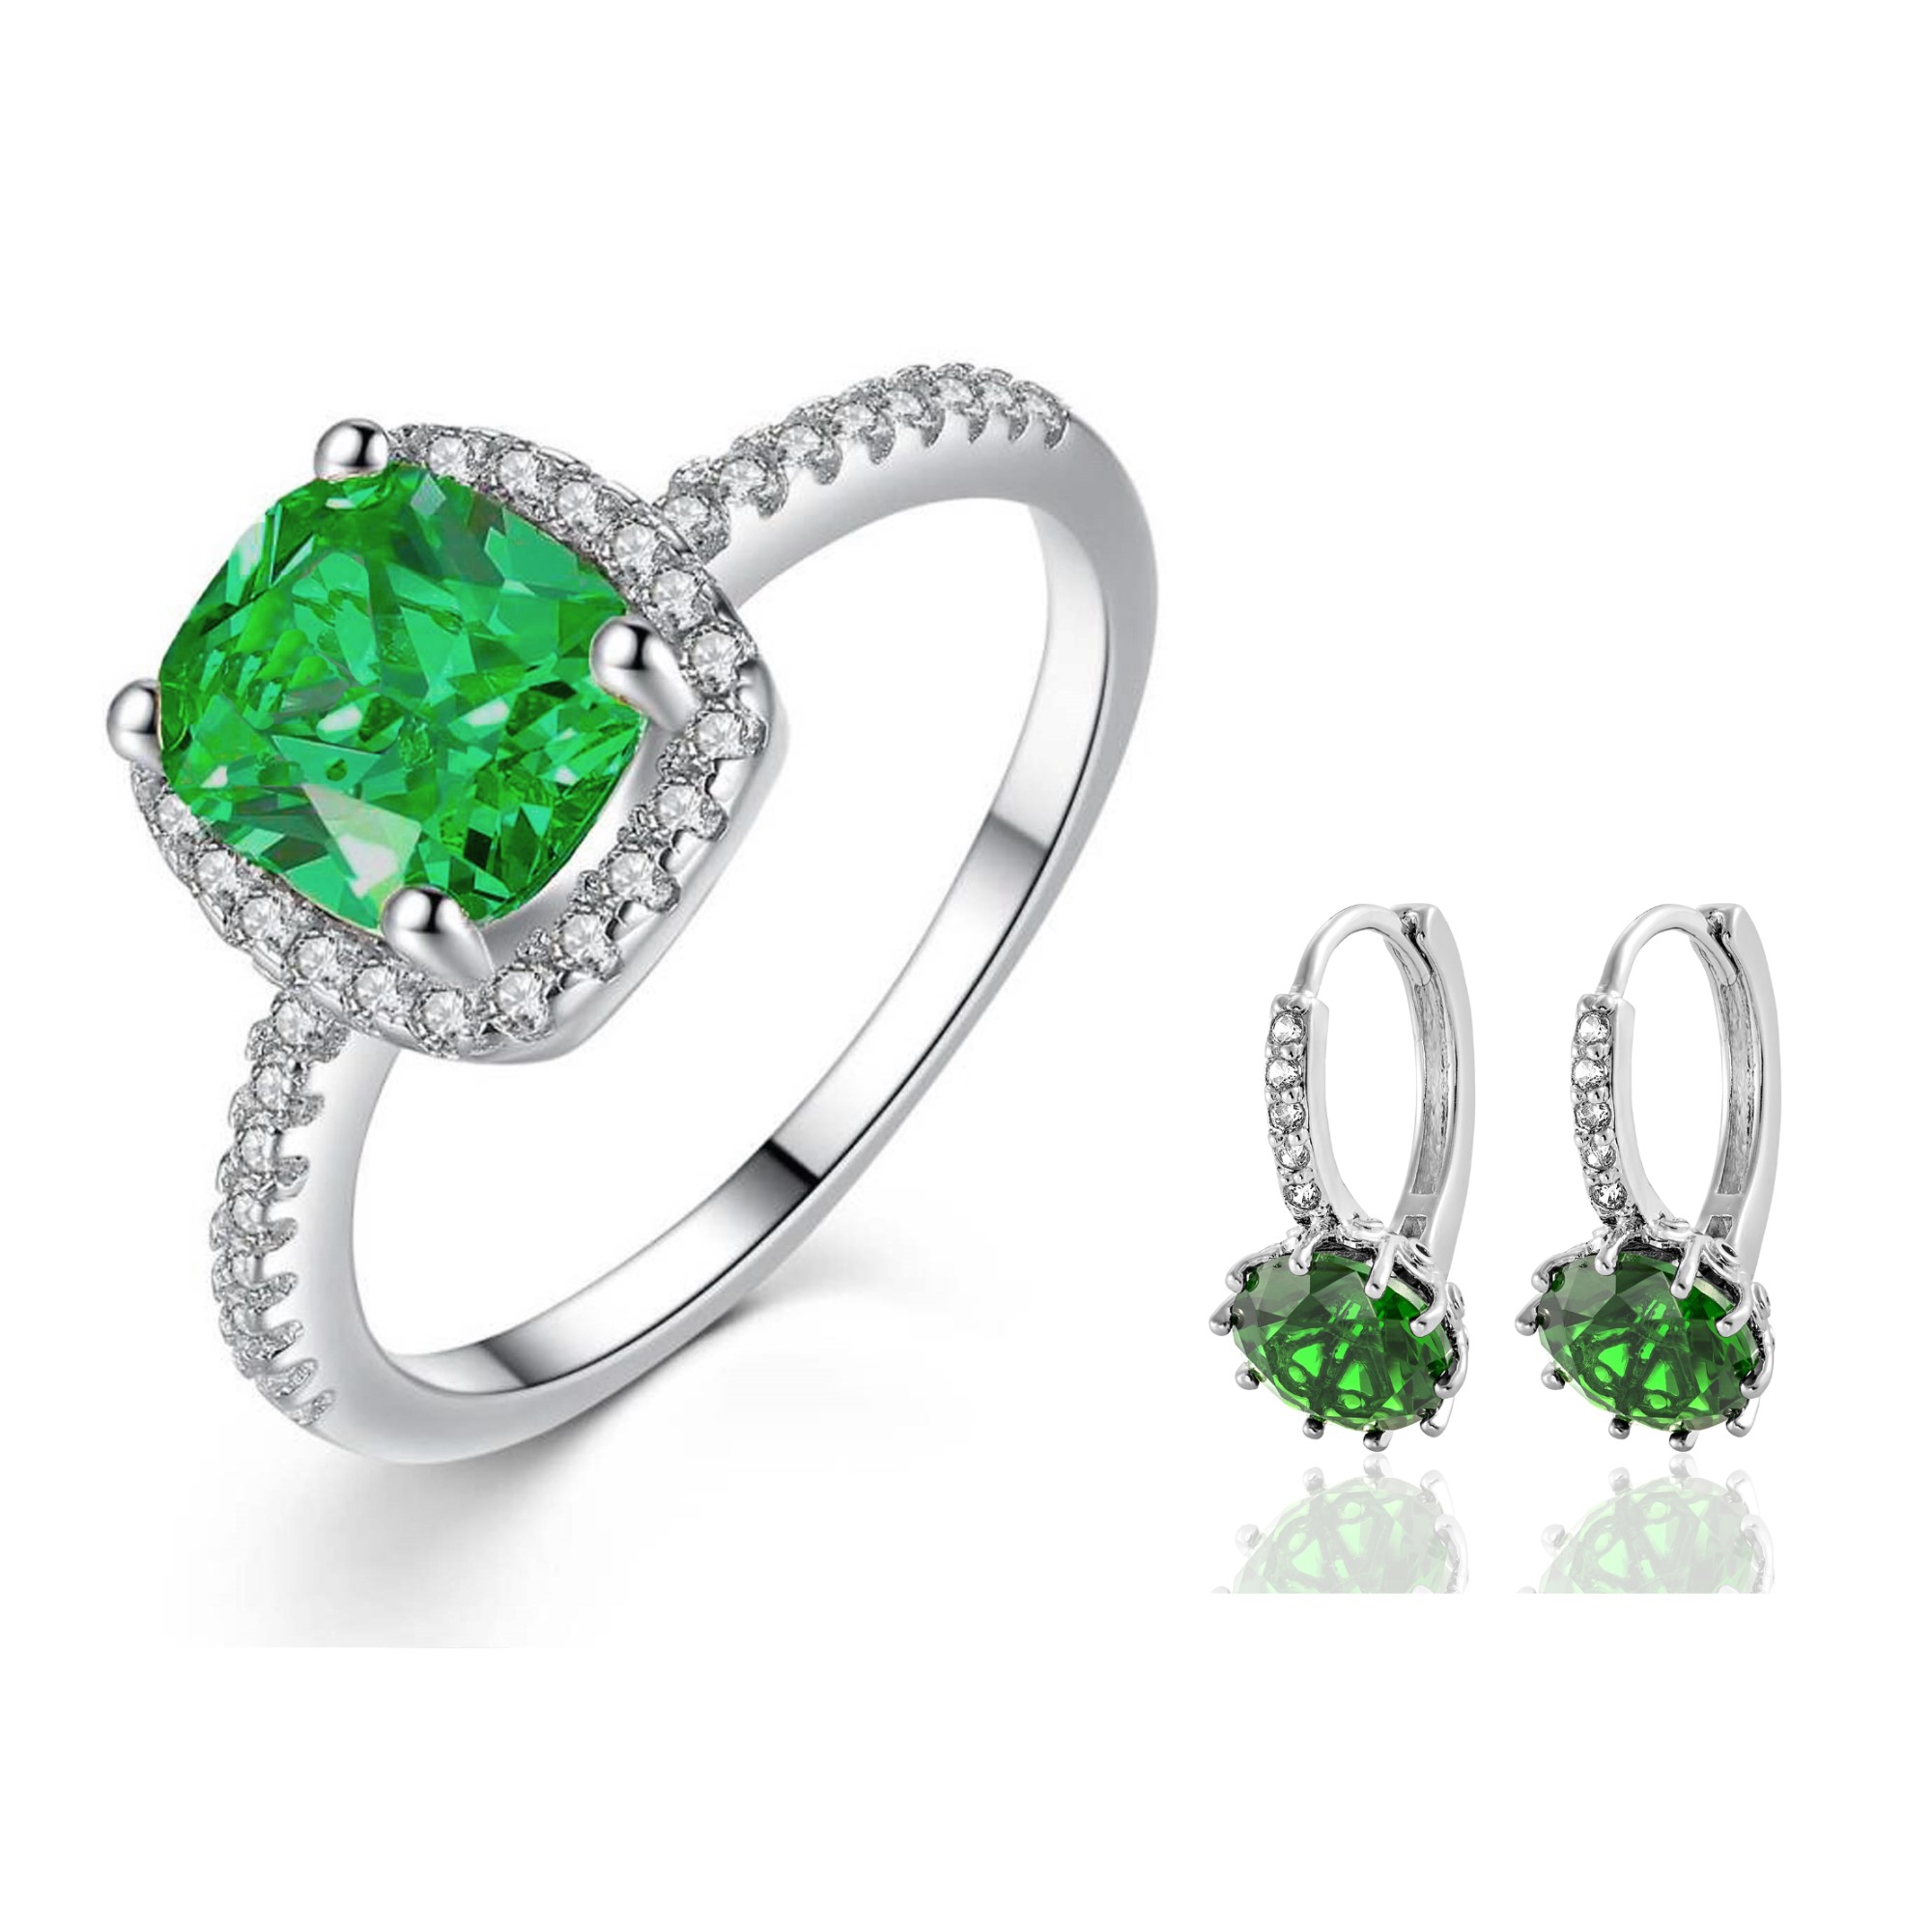 20 pcs - Emerald Green Crystal Ring and Huggies Earrings with Cubic Zirconia Set - 10 Sets - Random Size|GCJ048+GCJ005-Green-Random|UK SELLER